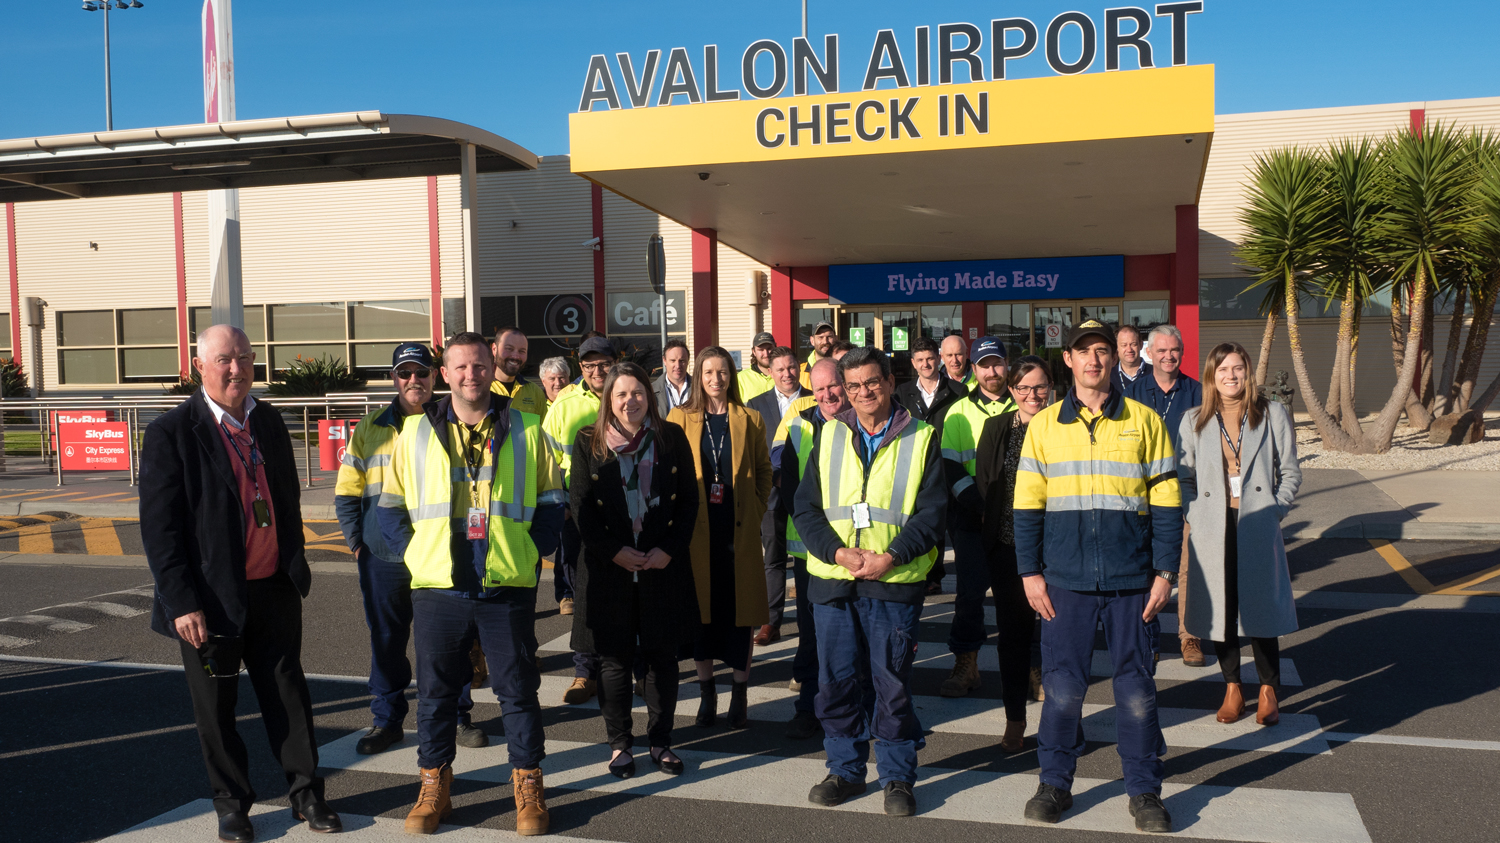 Avalon Airport staff